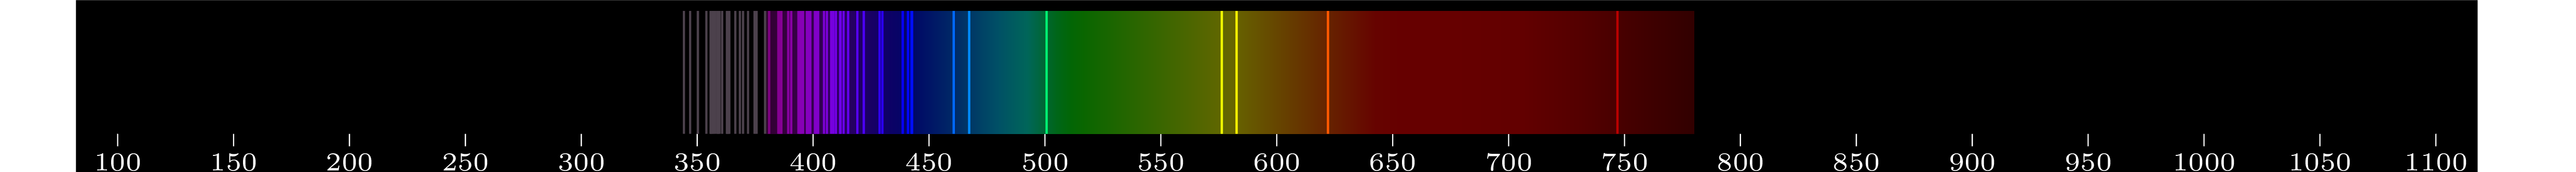 emmision spectra of element Er